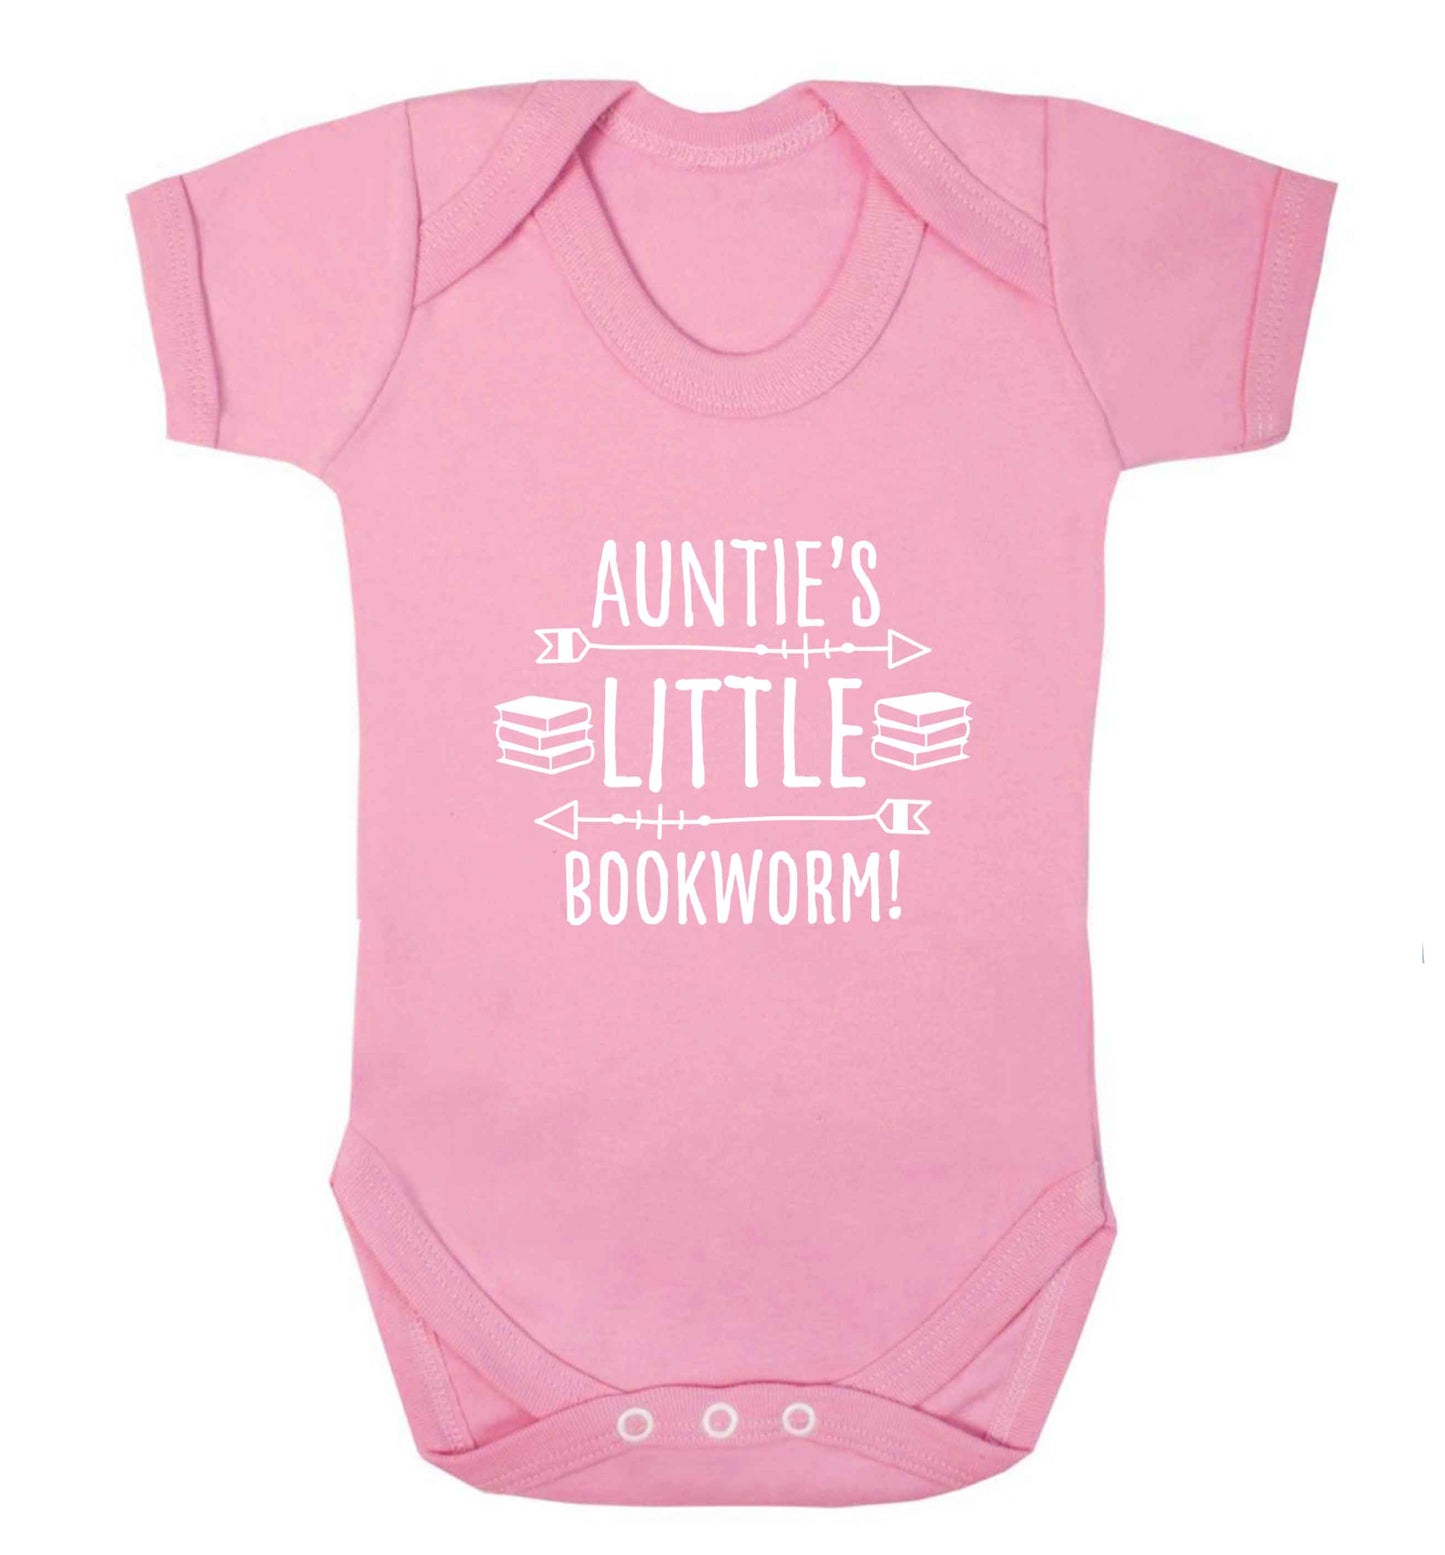 Auntie's little bookworm baby vest pale pink 18-24 months